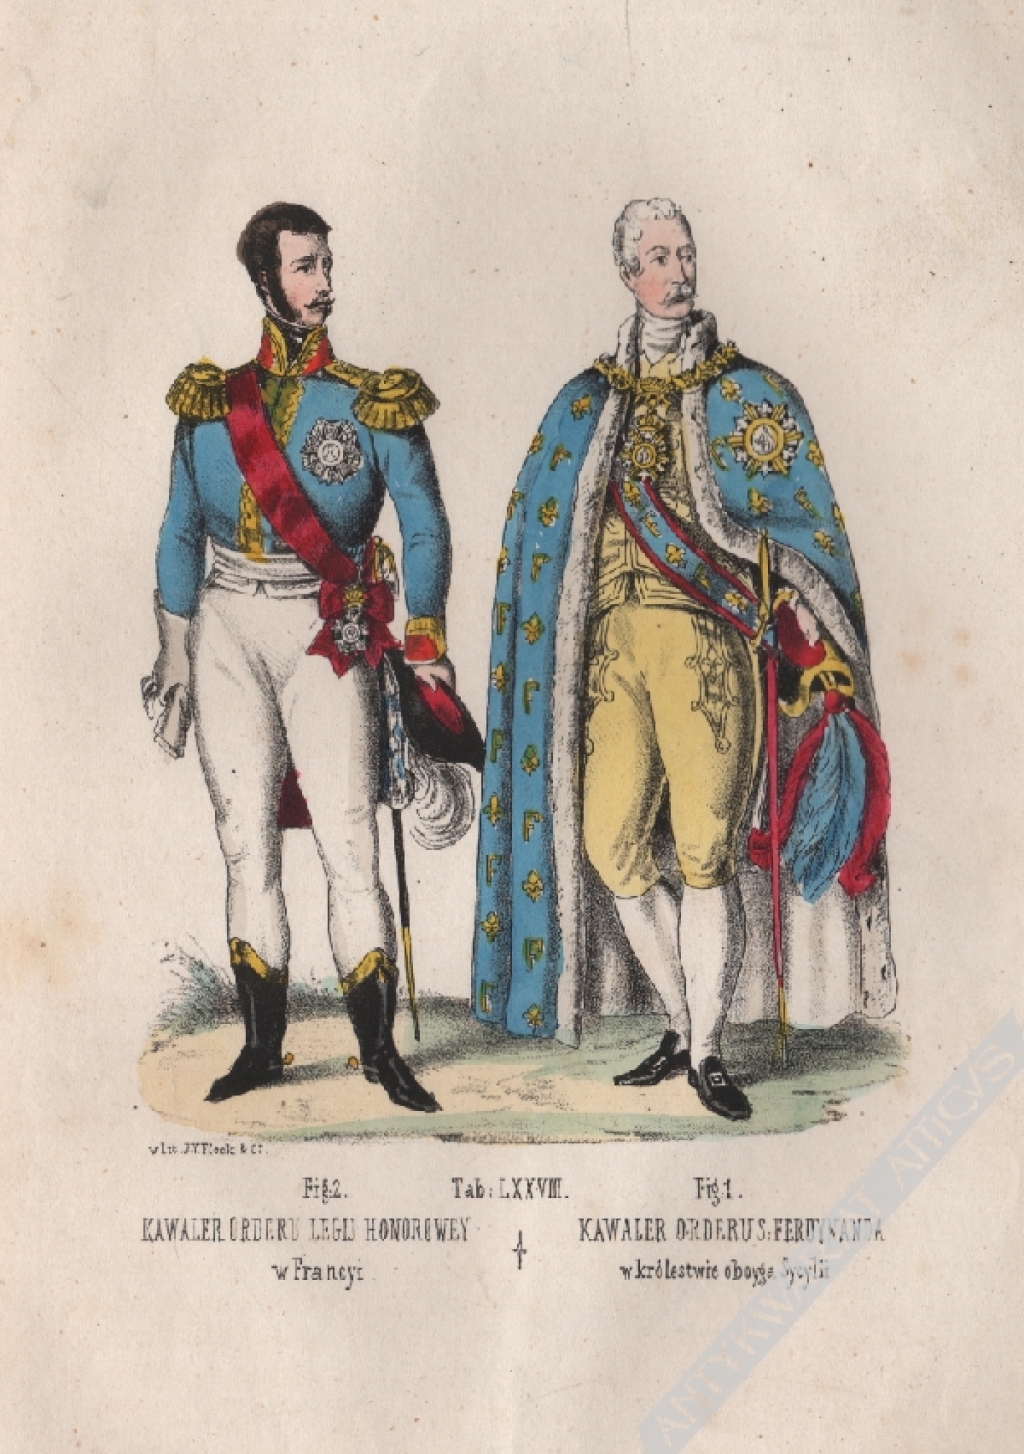 [rycina, ok. 1848] Kawaler Orderu Legij Honorowey w FrancyiKawaler Orderu S. Ferdynanda w Królestwie Oboyga Sycylii